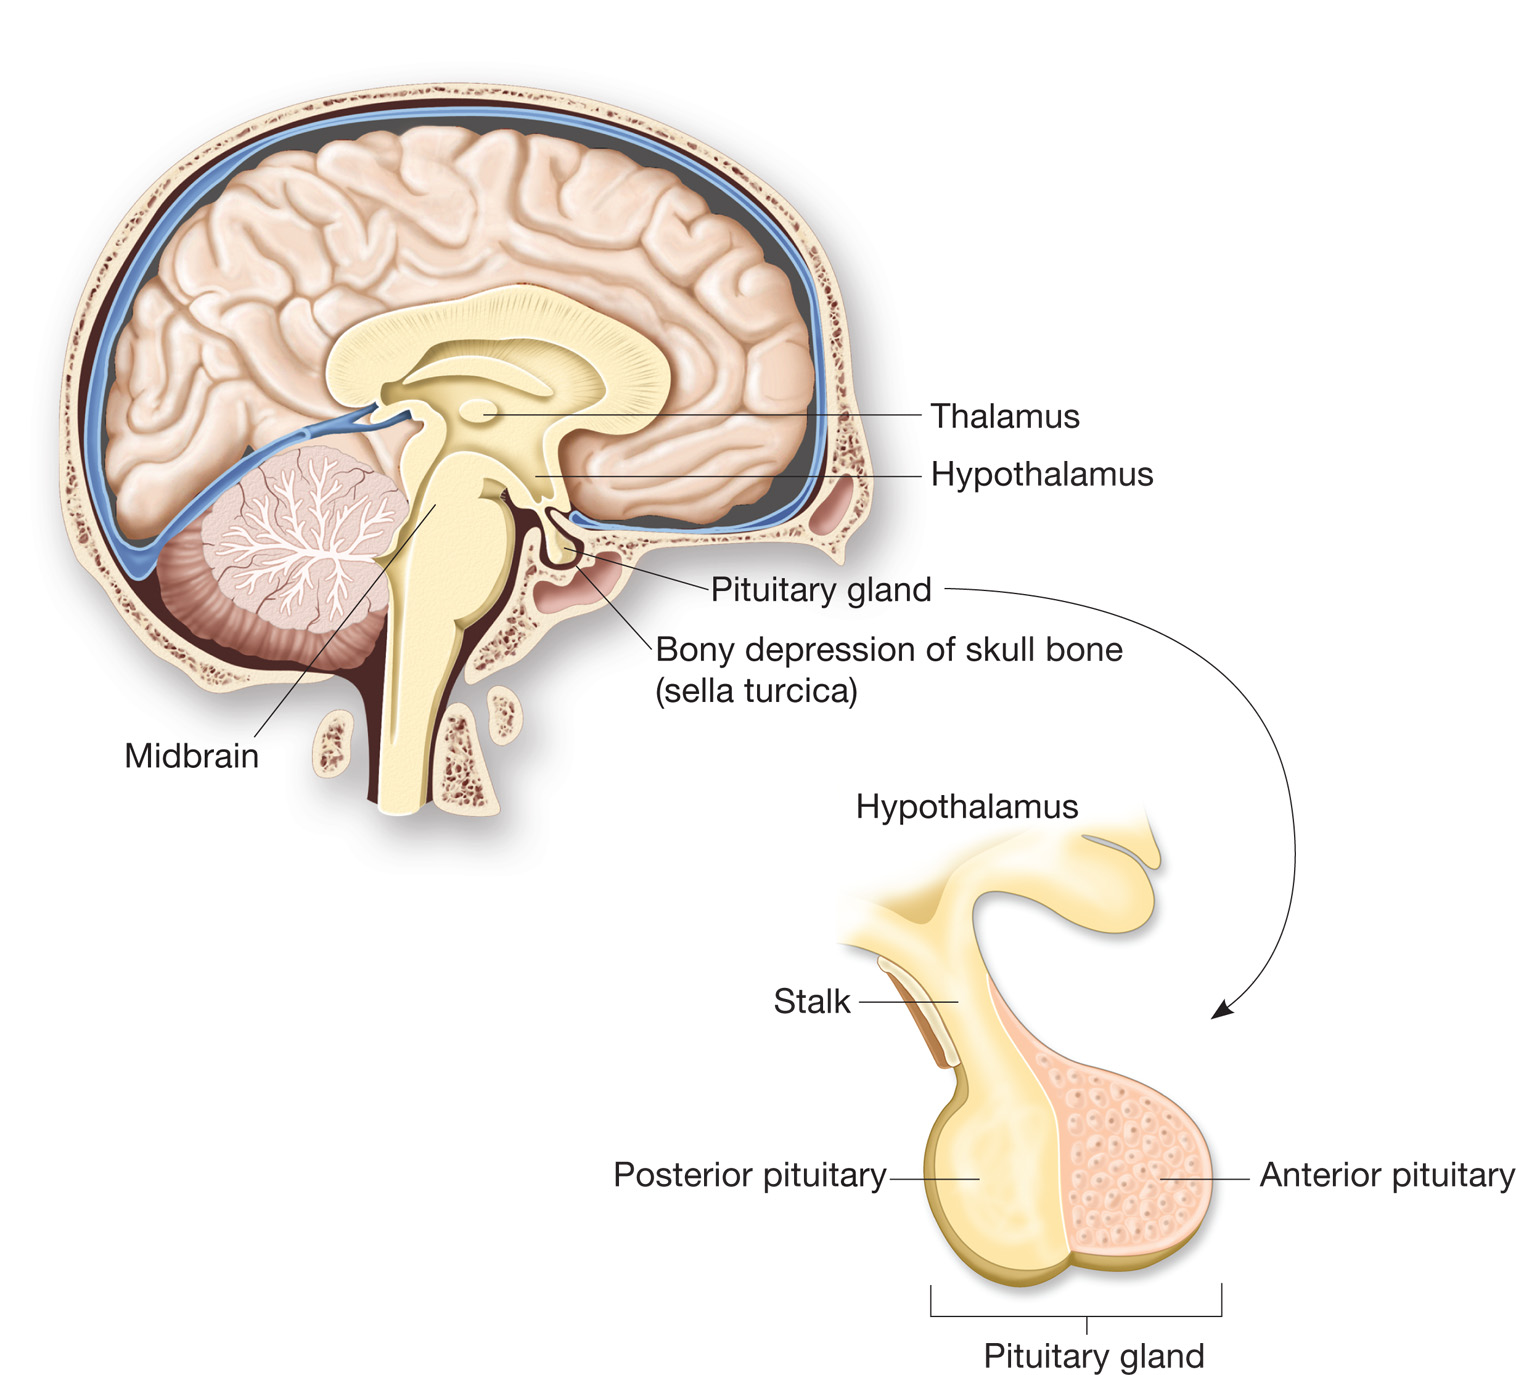 Гипофиз в голове. Мозг анатомия гипофиз. Гипоталамус гипофиз эпифиз. Головной мозг гипоталамус гипофиз. Анатомия турецкого седла и гипофиза.